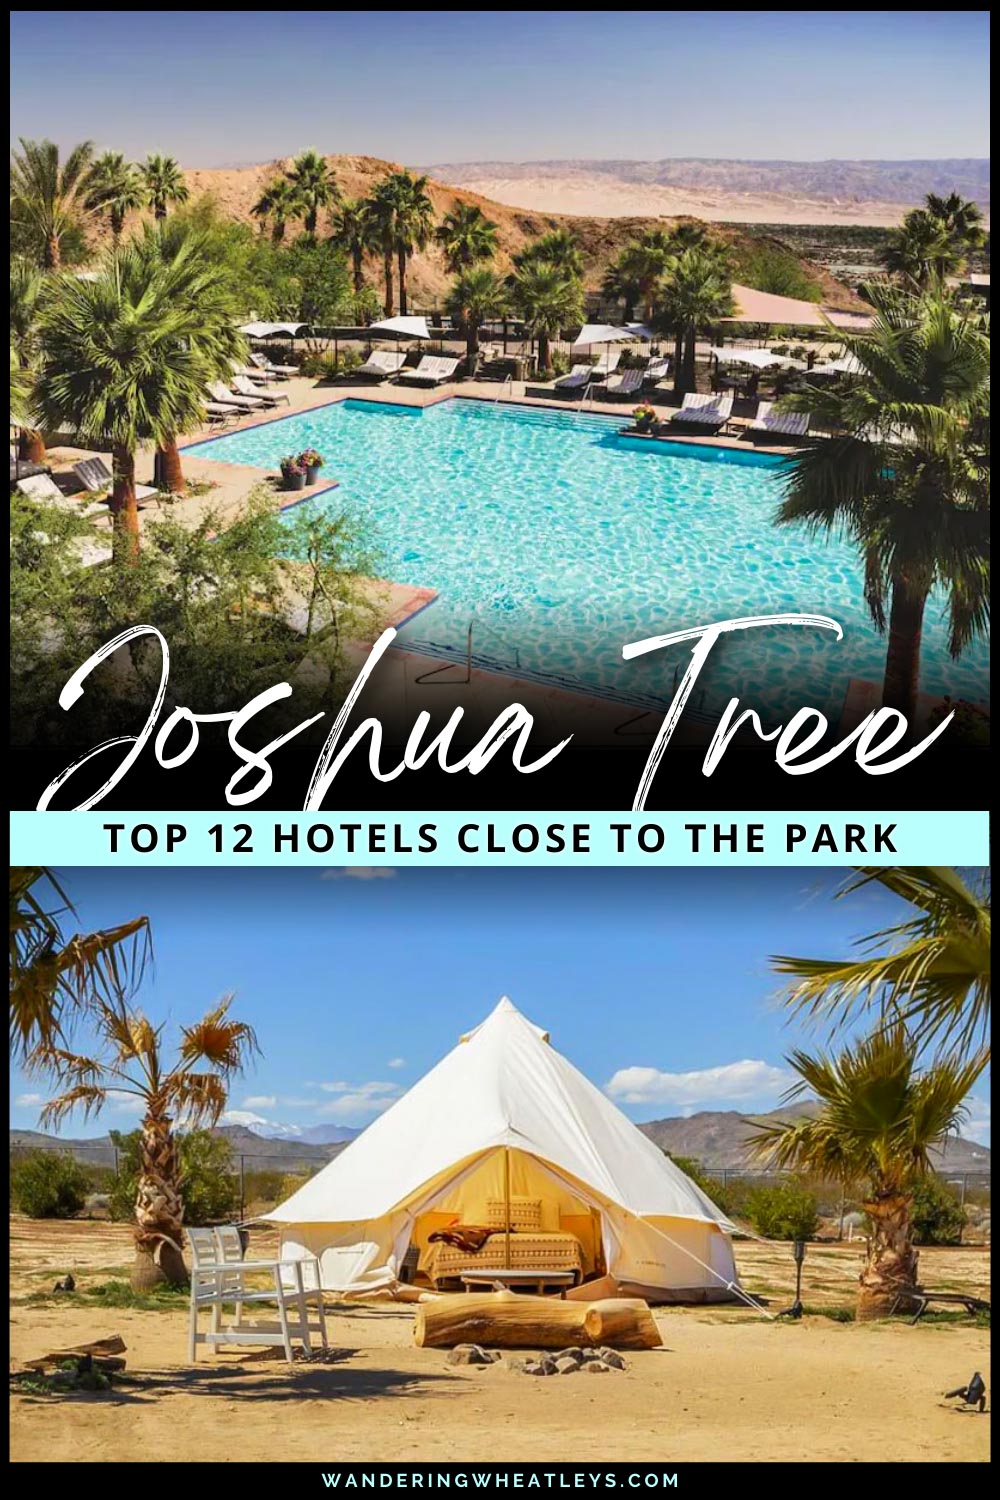 The Best Hotels near Joshua Tree National Park